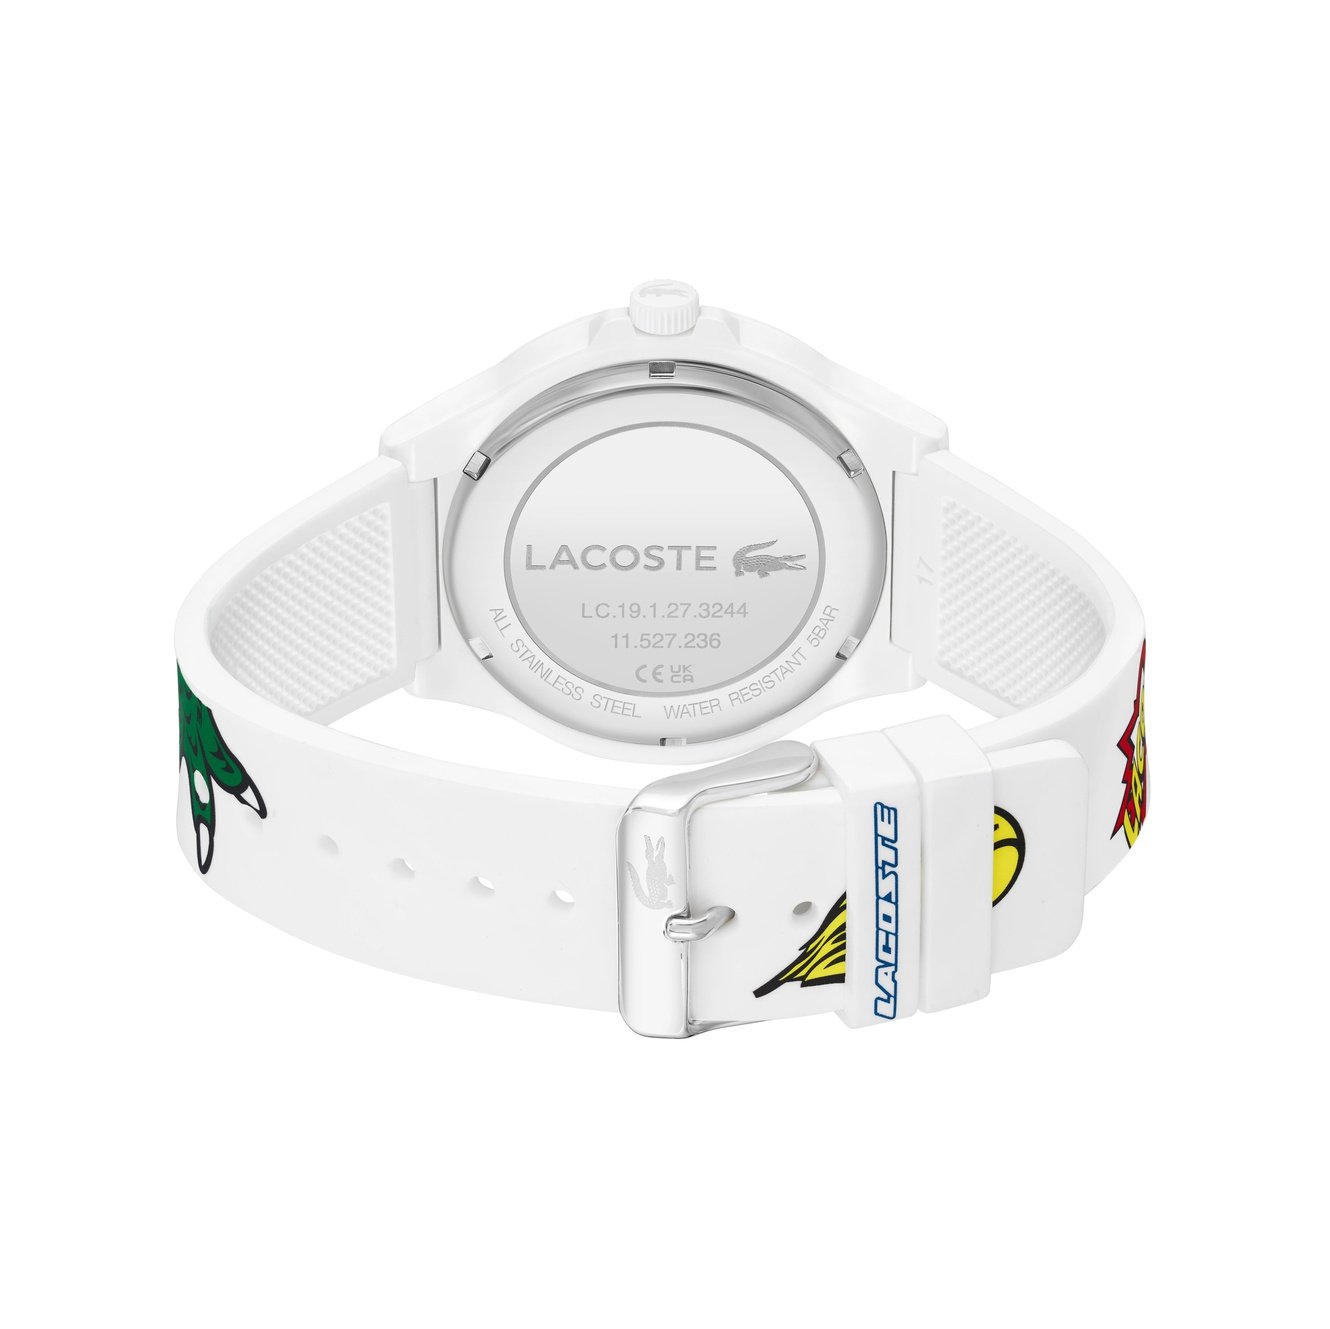 Unisex Neocroc Holiday Capsule Watch 2011232 Lacoste